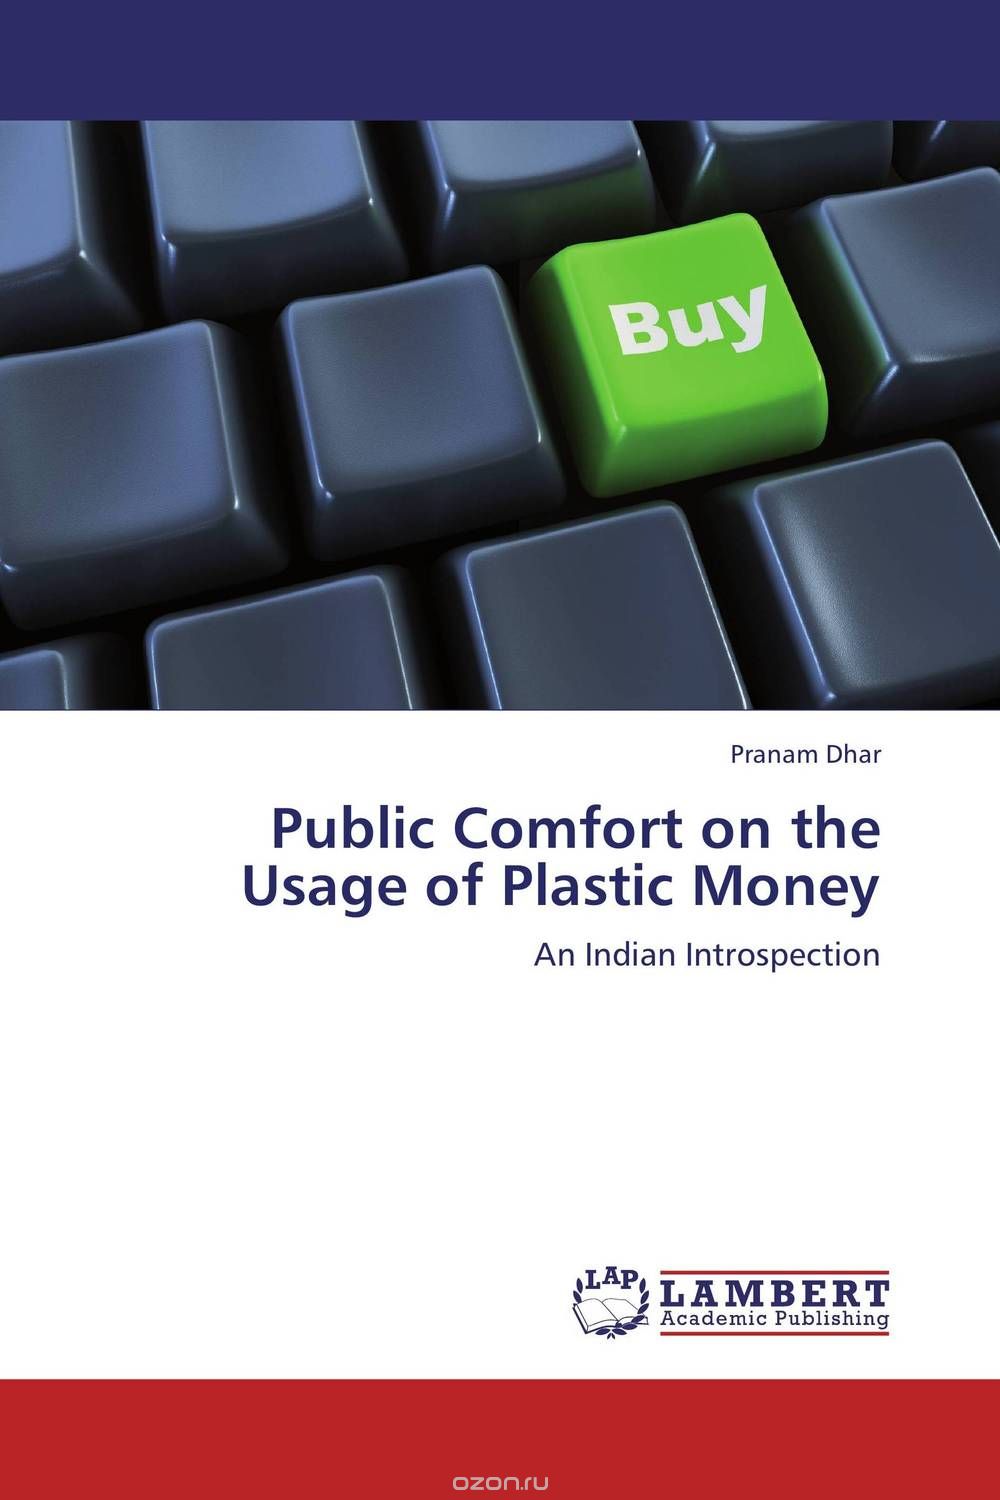 Скачать книгу "Public Comfort on the Usage of Plastic Money"